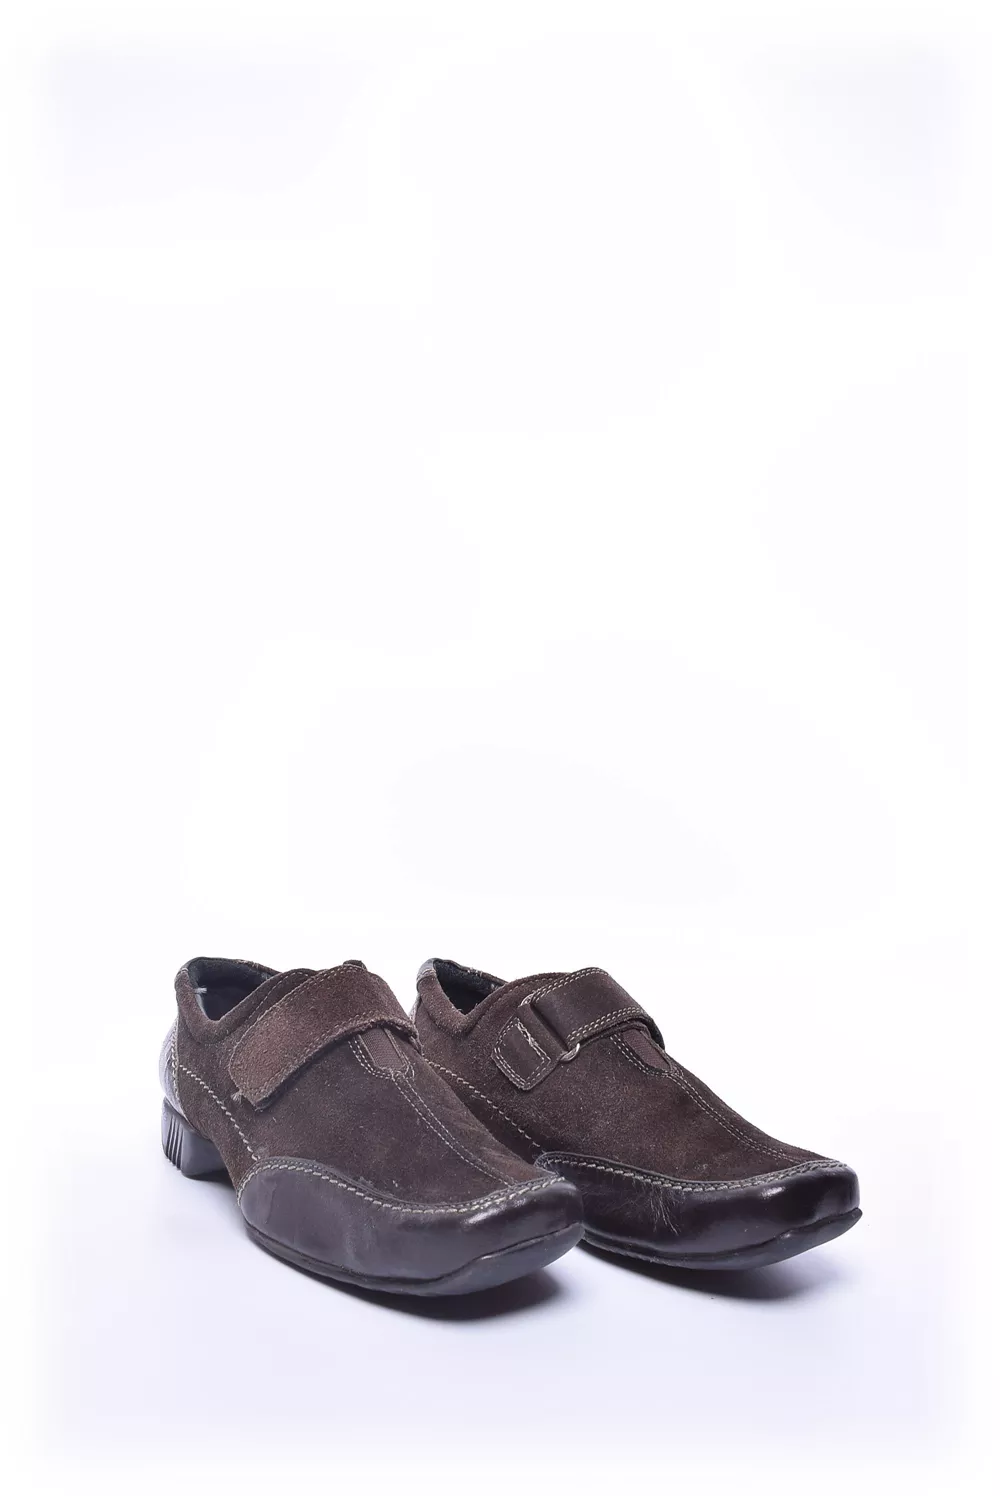 Pantofi vintage dama [3]